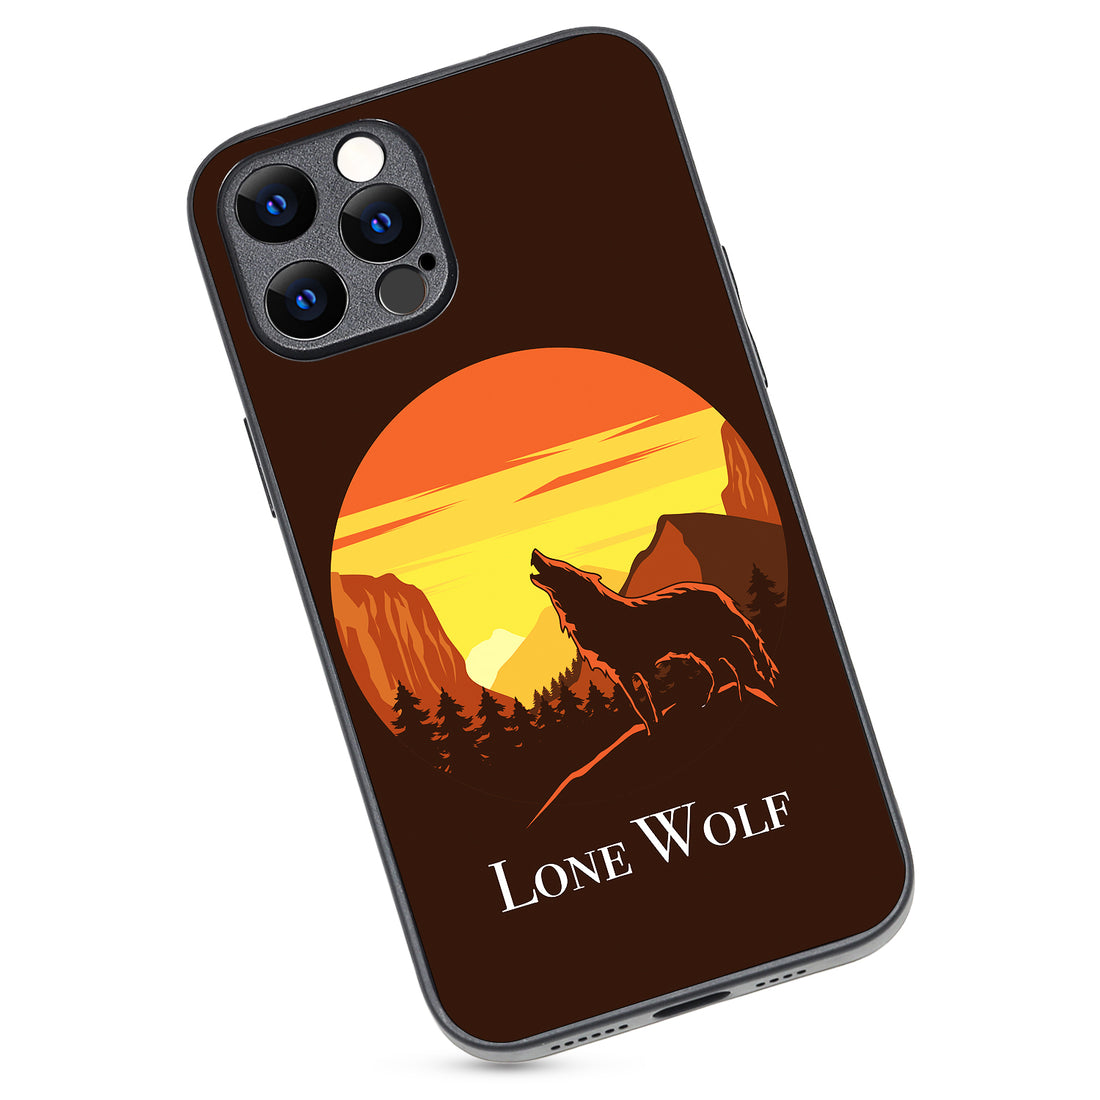 Lone Wolf Cartoon iPhone 12 Pro Max Case